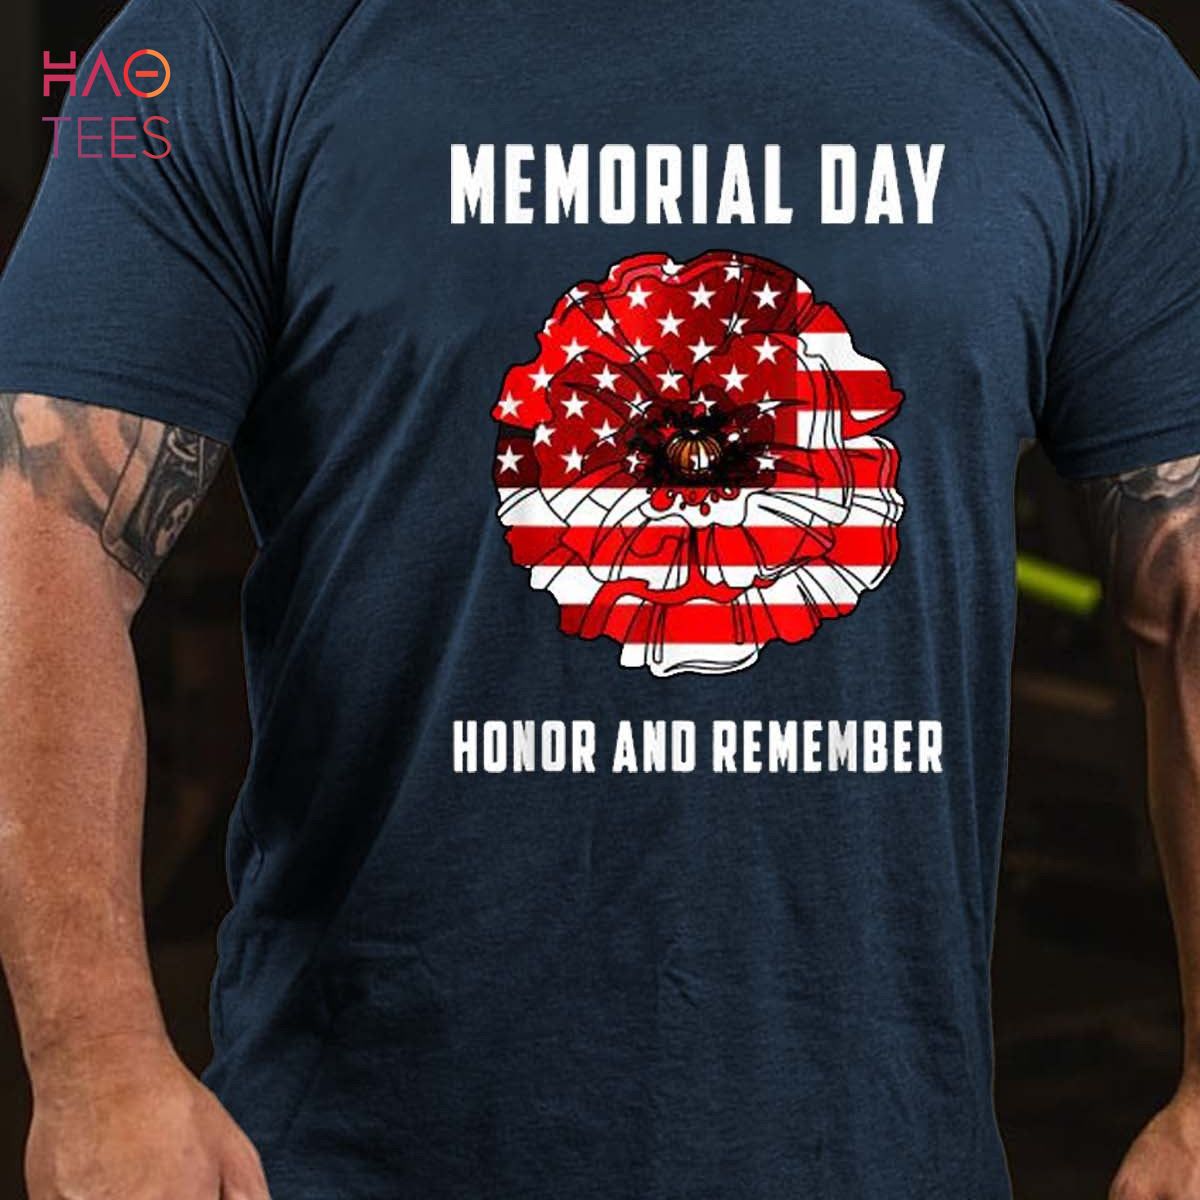 Military Man and Women Tee Honor and Remember Shirt Memorial Day Shirt Patriotic T-shirt Veteran Gift American Flag Shirt 4th of July